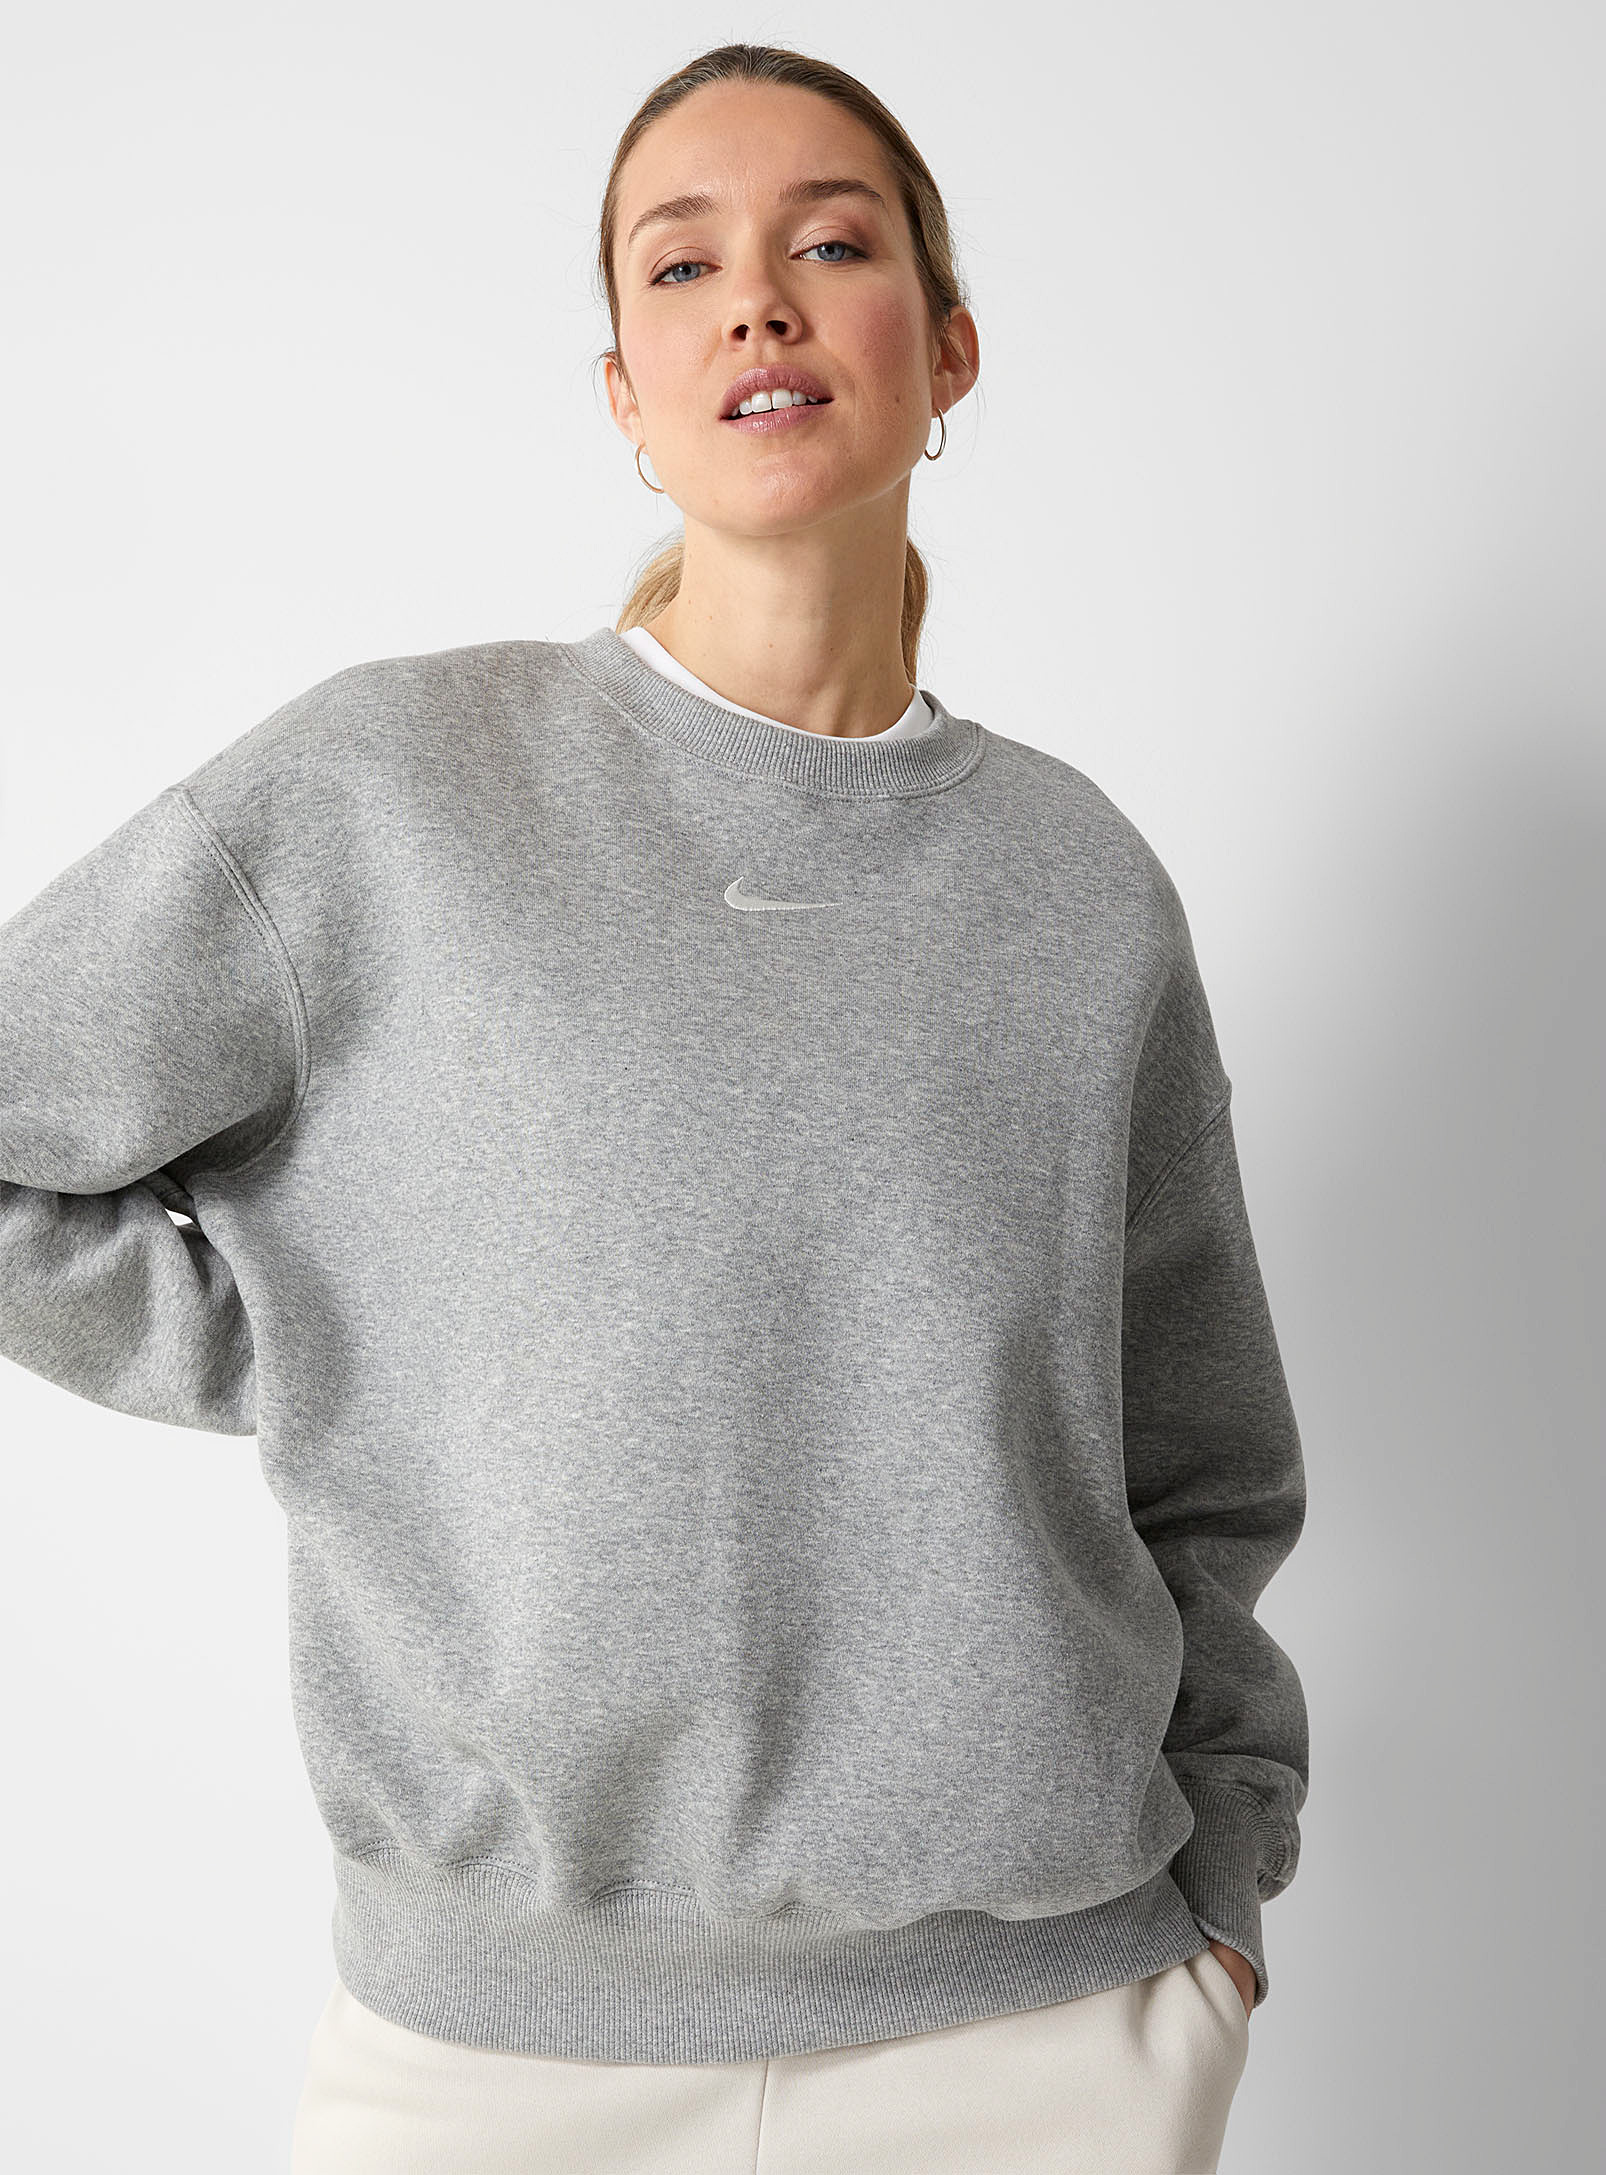 Nike - Women's Oversized Phoenix sweatshirt